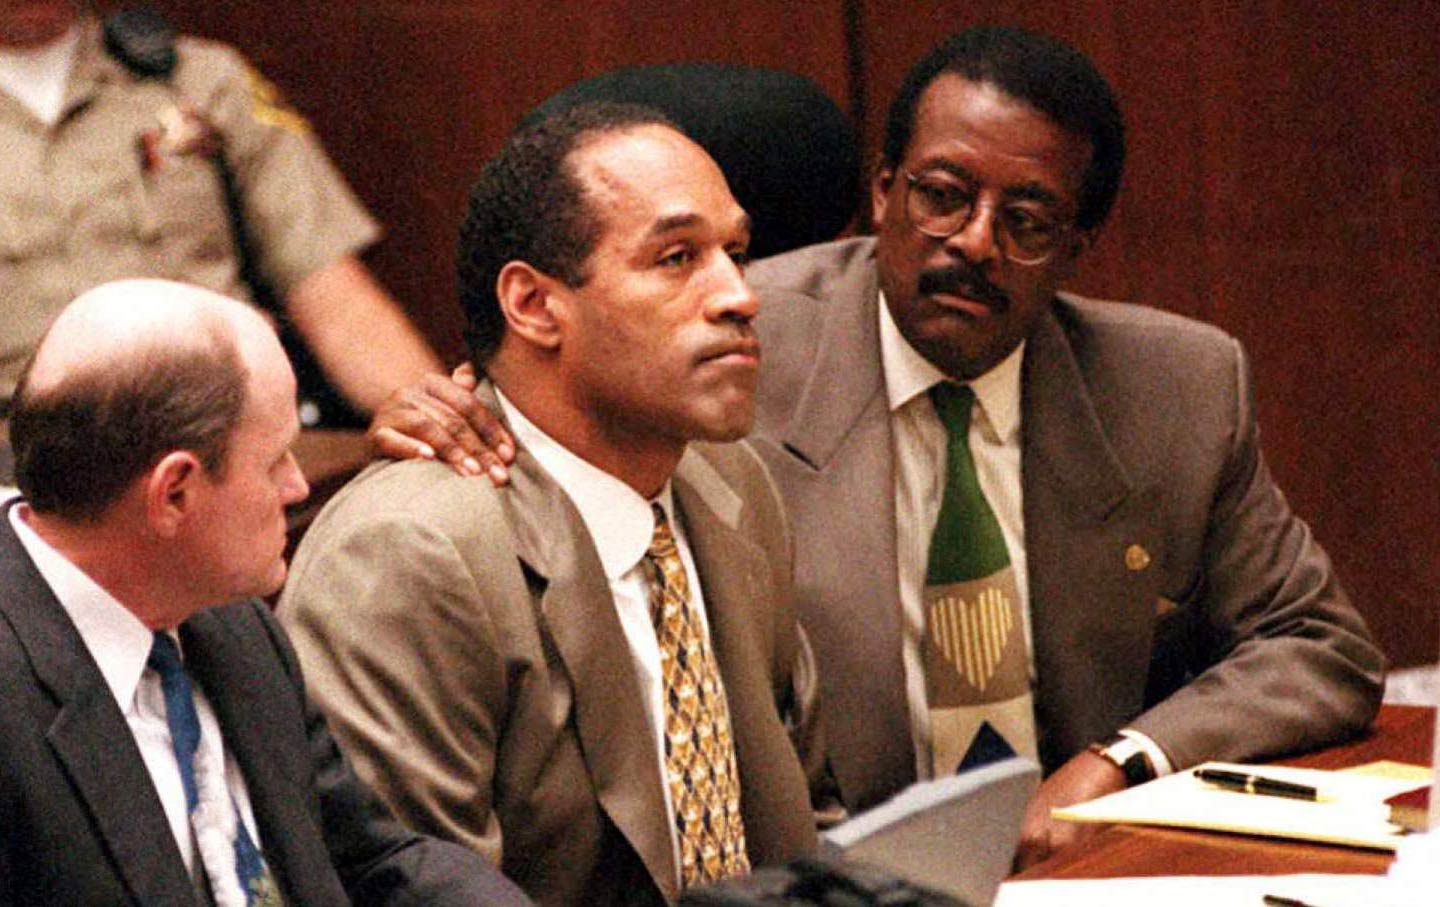 O.J. Simpson at his 1995 trial